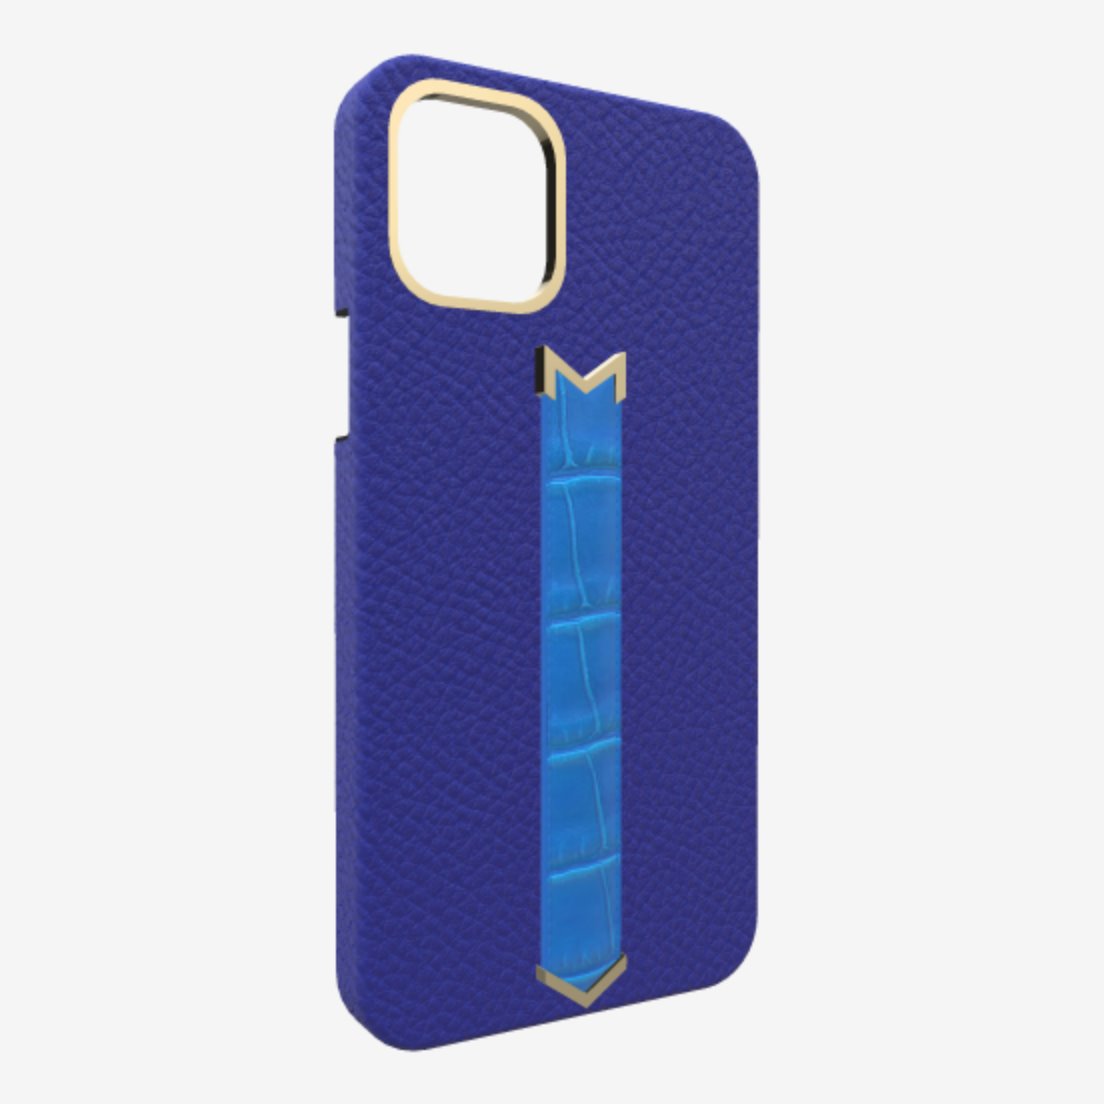 Gold Finger Strap Case for iPhone 13 Pro in Genuine Calfskin and Alligator Electric Blue Royal Blue 